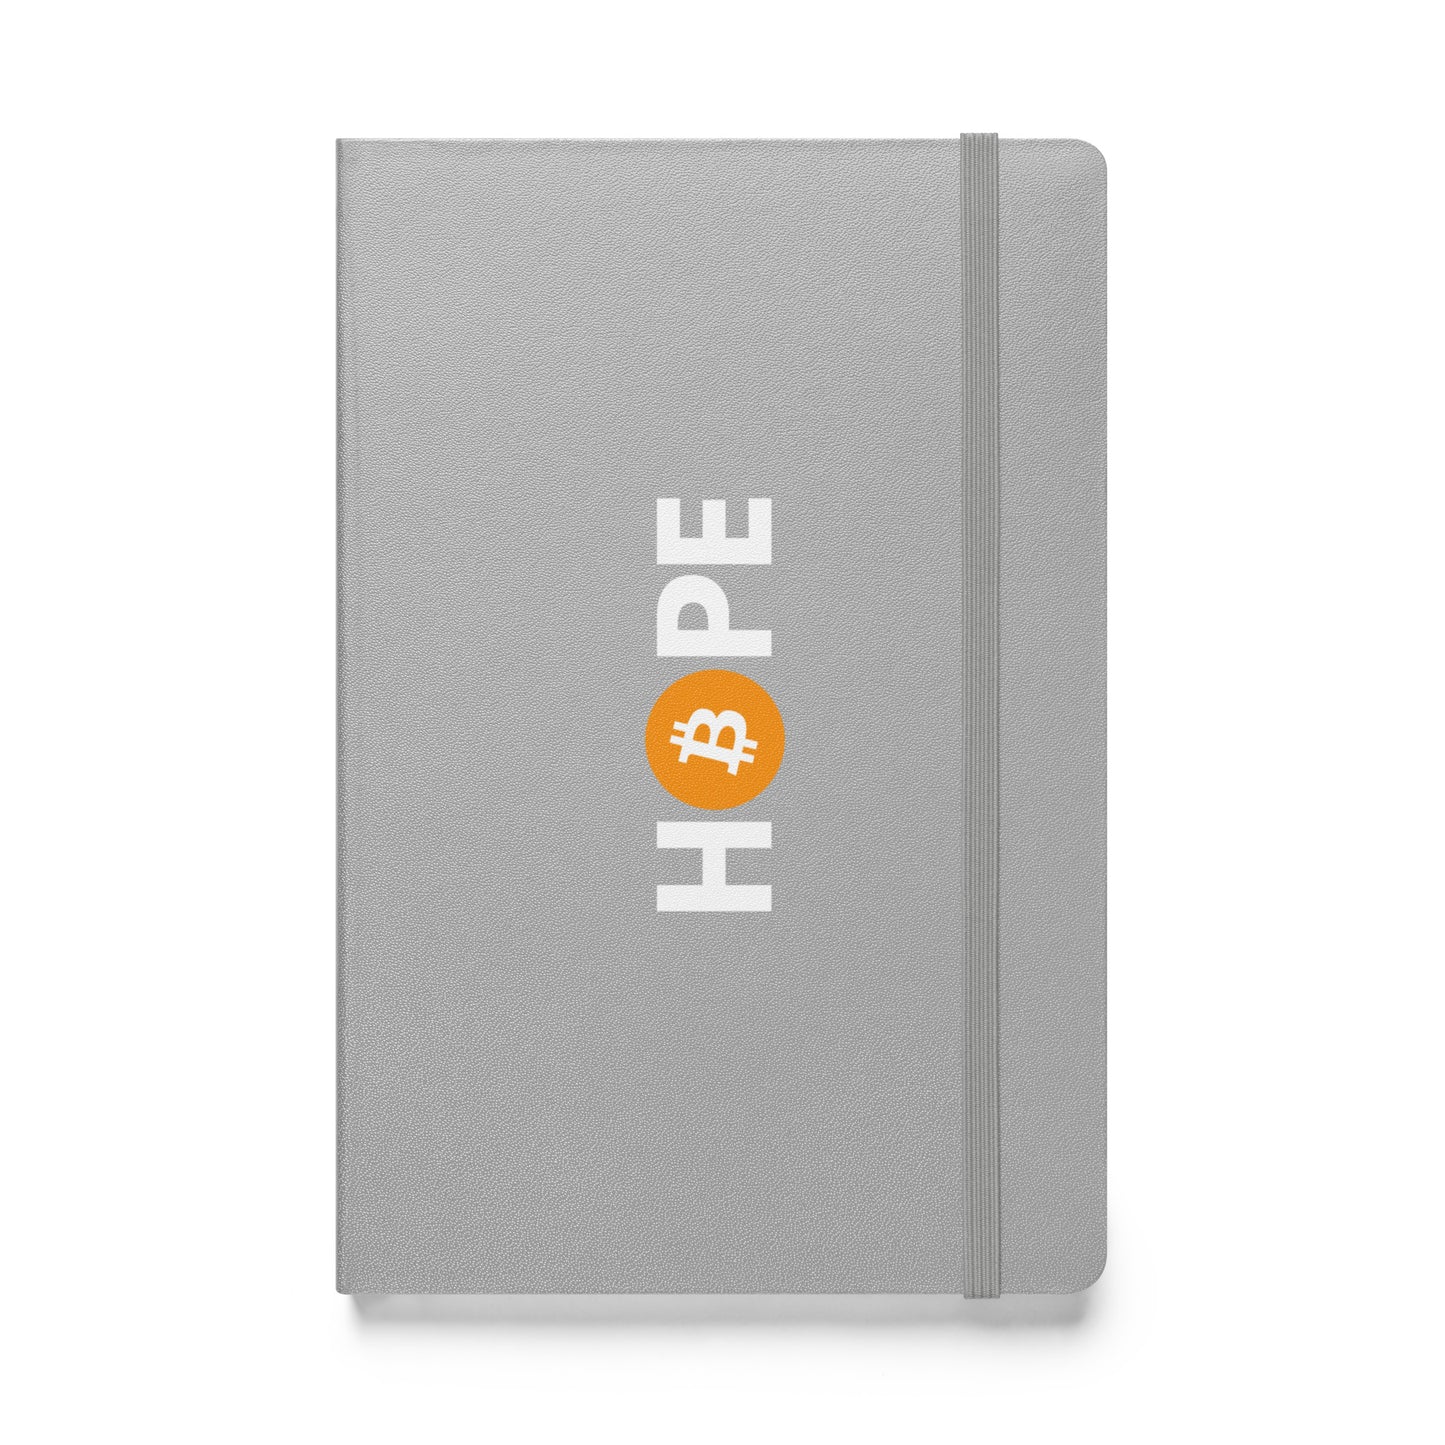 Hope Hardcover bound notebook